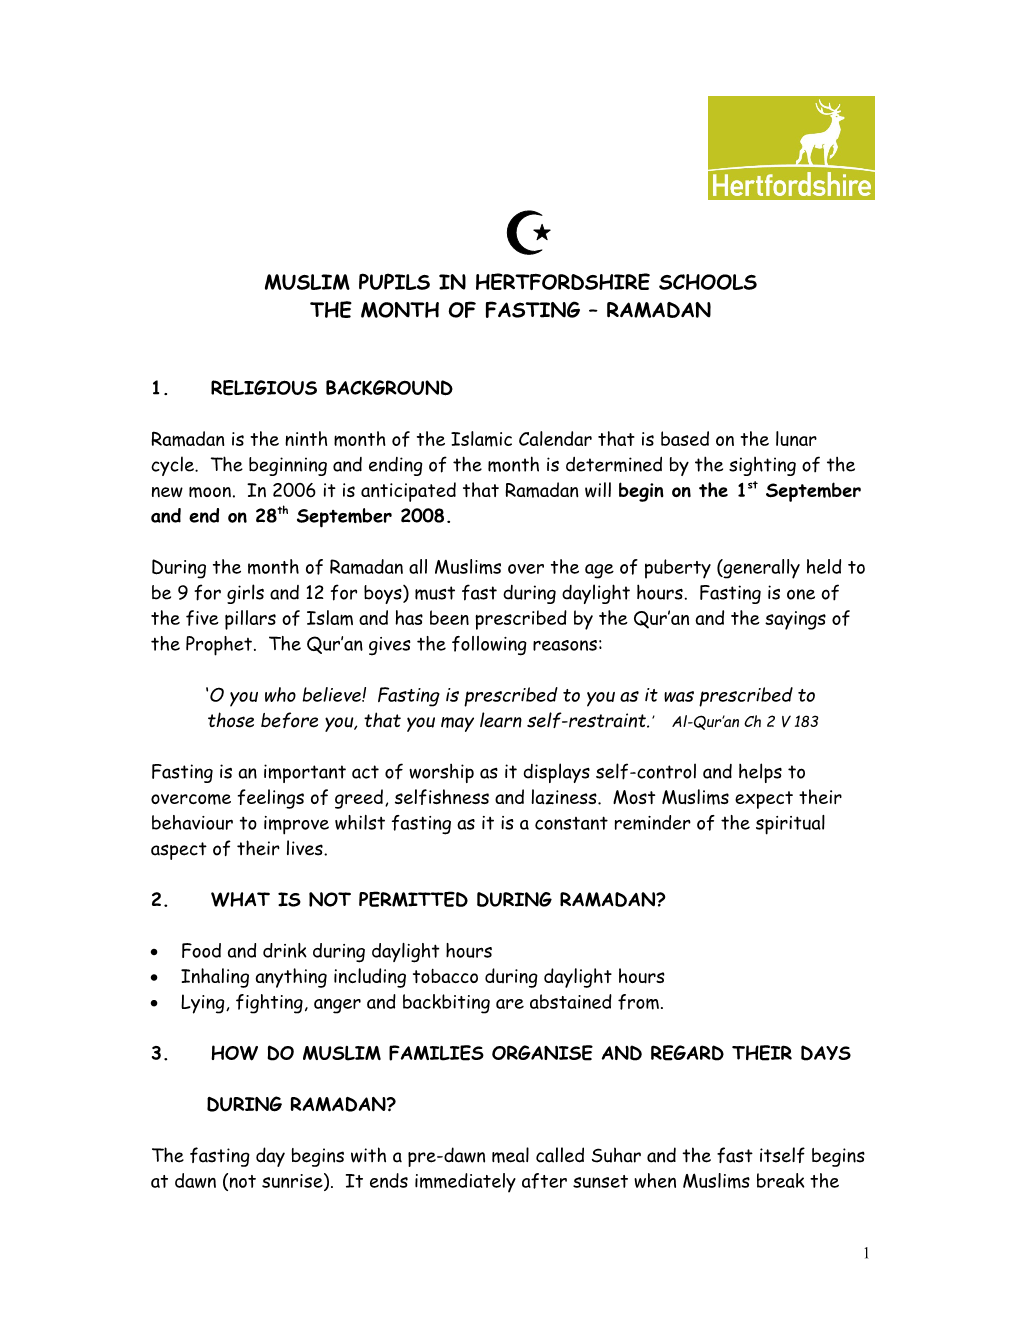 Ramadan Guideline - Muslim Pupils in Hertfordshire Schools the Month of Fasting Ramadan